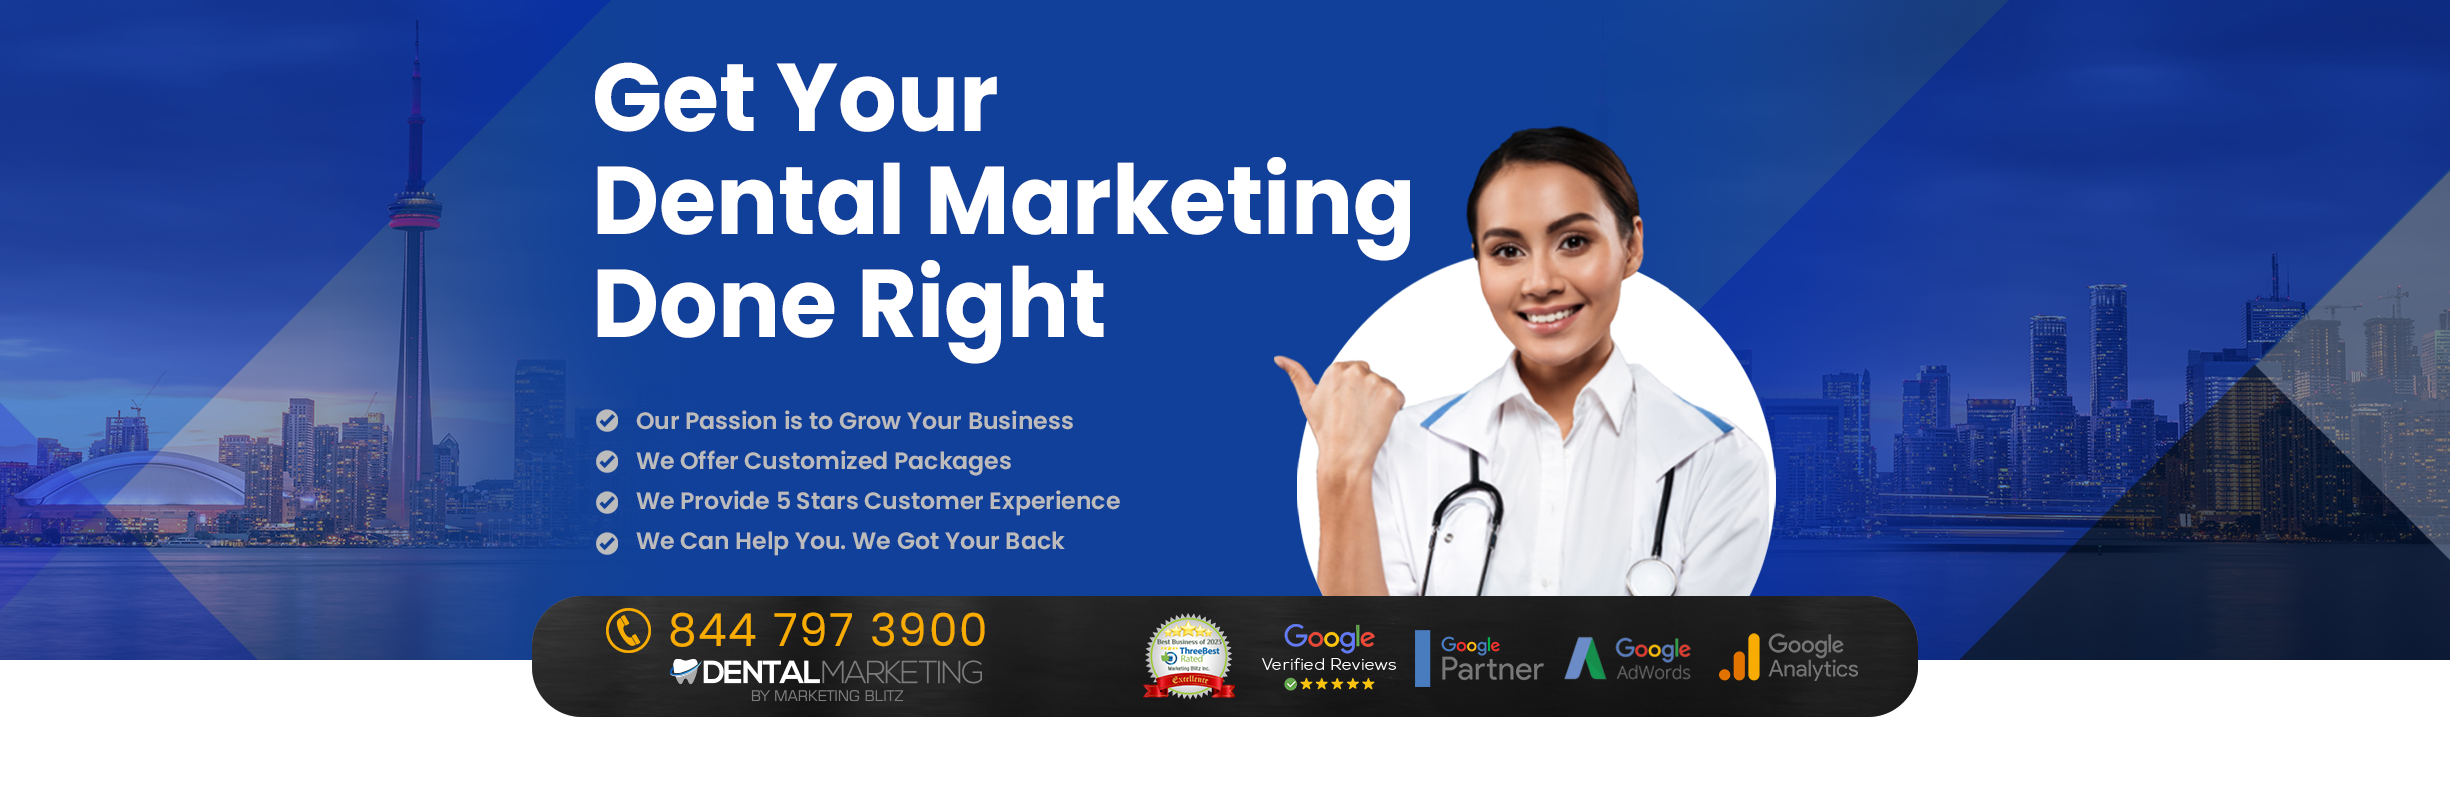 Dental Marketing Experts - Homepage Banner